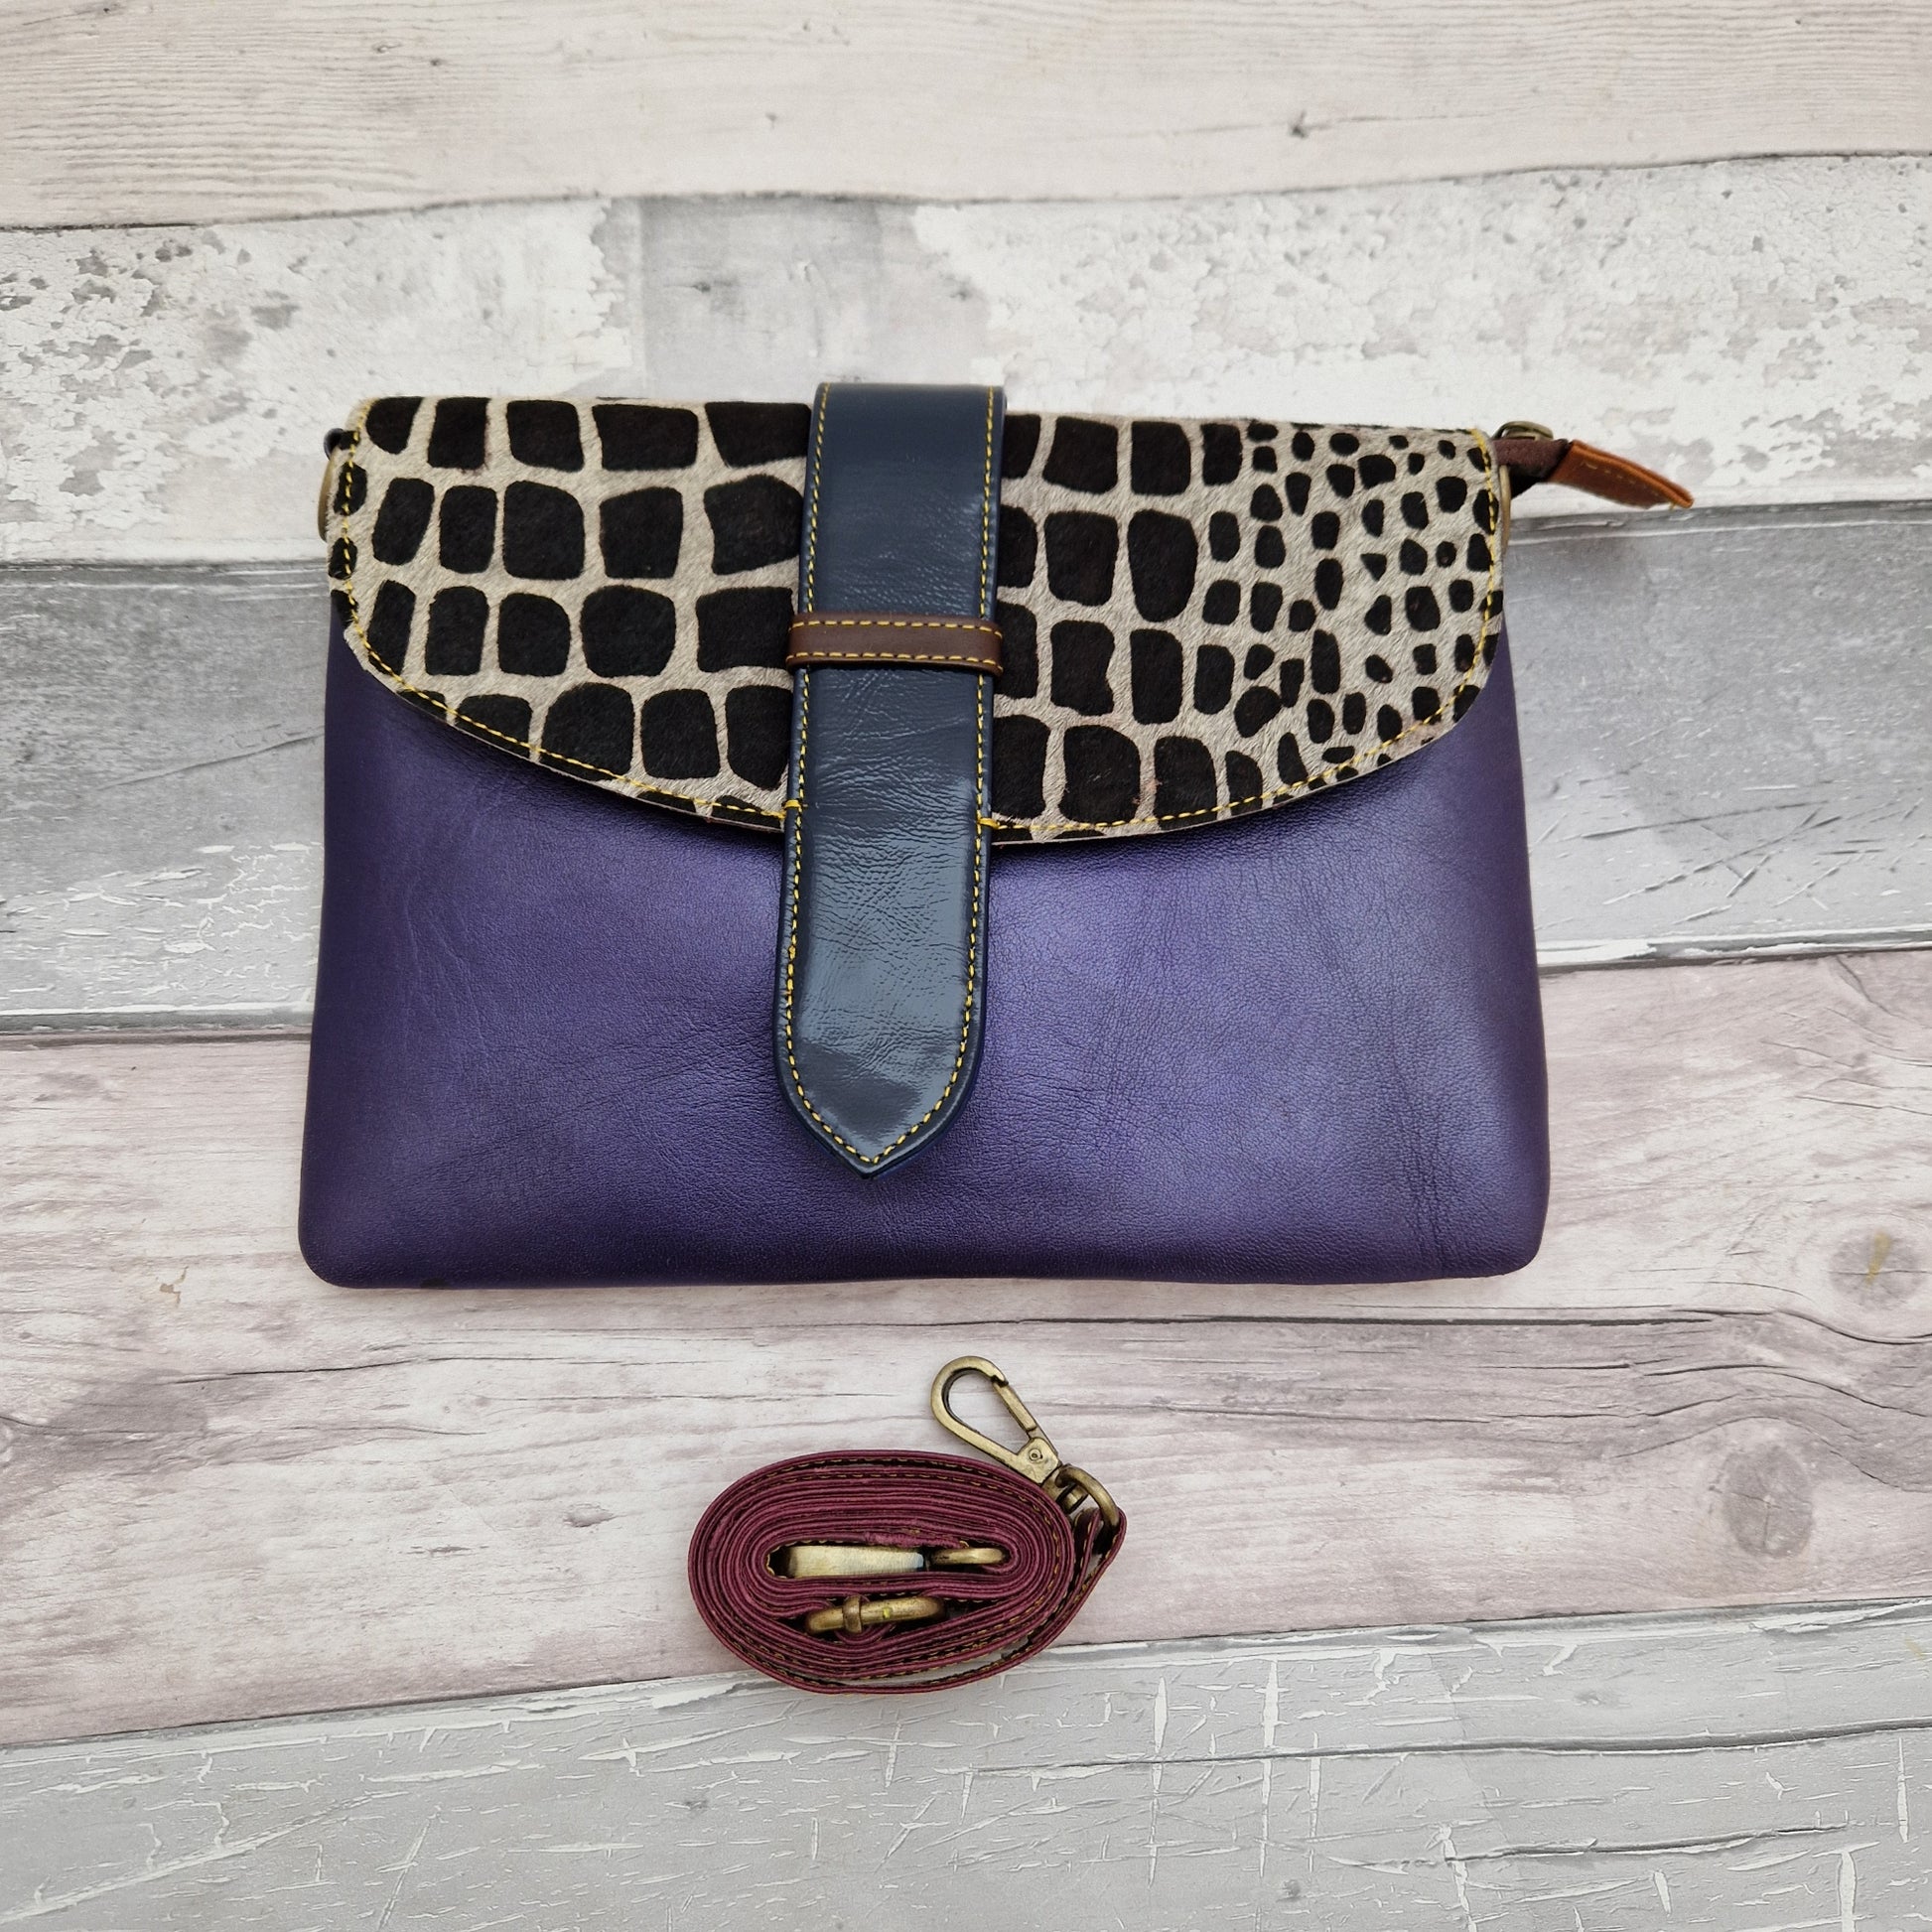 Metallic Purple leather Giraffe print envelope style bag.